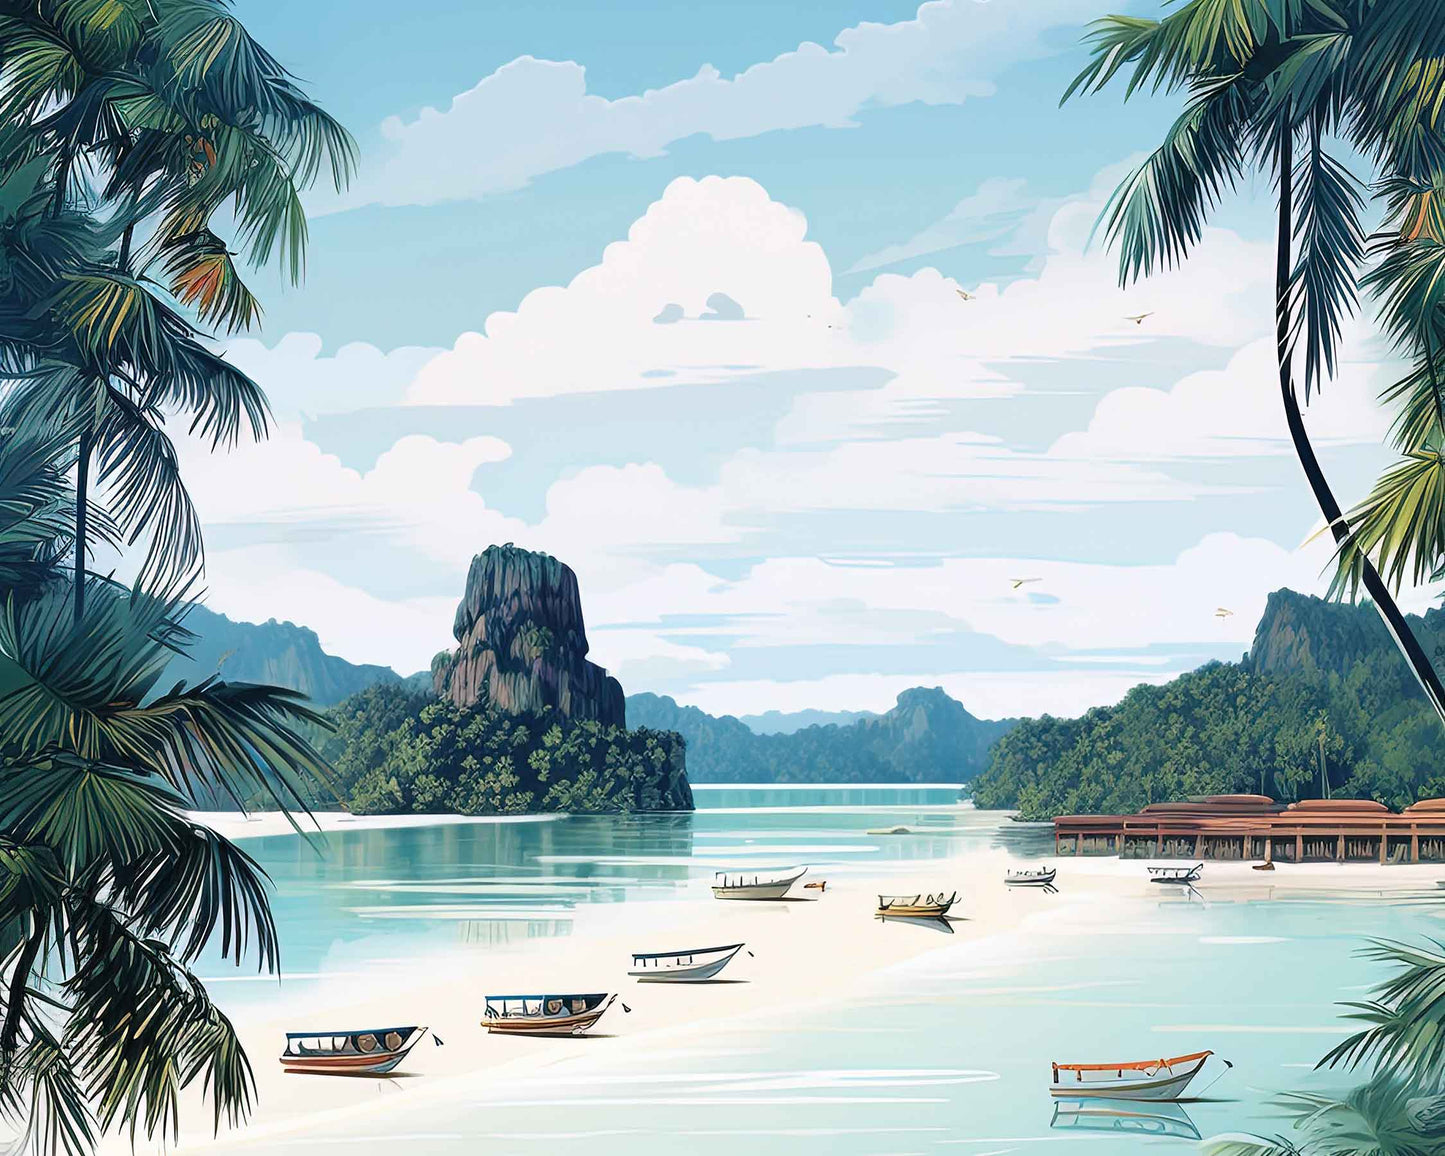 Framed Image of Phuket Thailand Wall Art Print Travel Posters Illustration